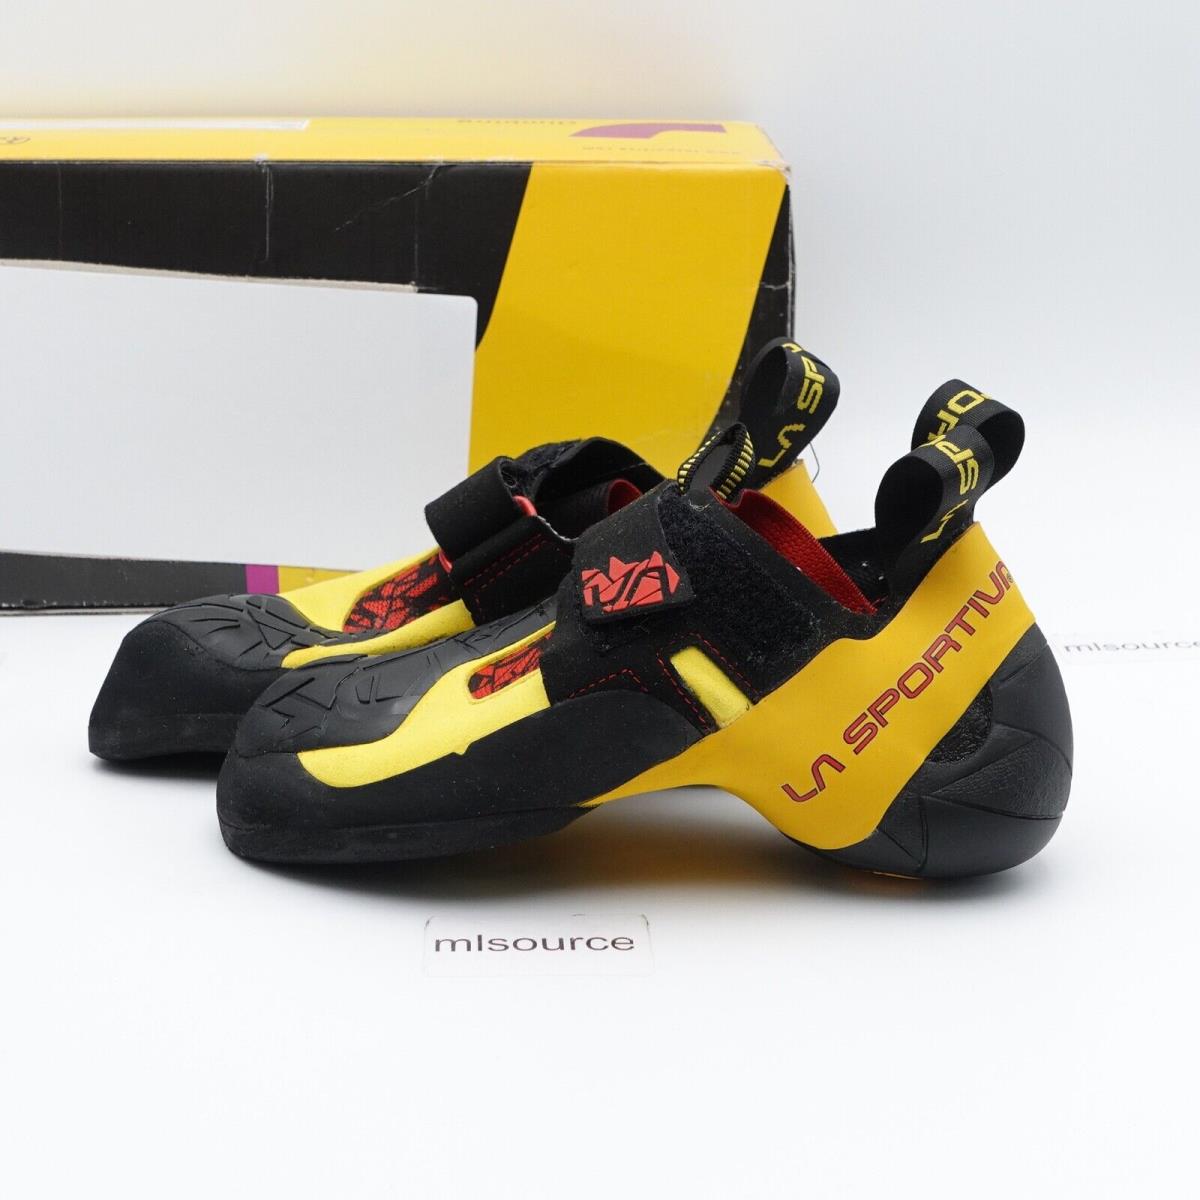 Size 7.5 / 38.5 EU Women`s La Sportiva Skwama Climbing Shoes 10SBY Black/yellow